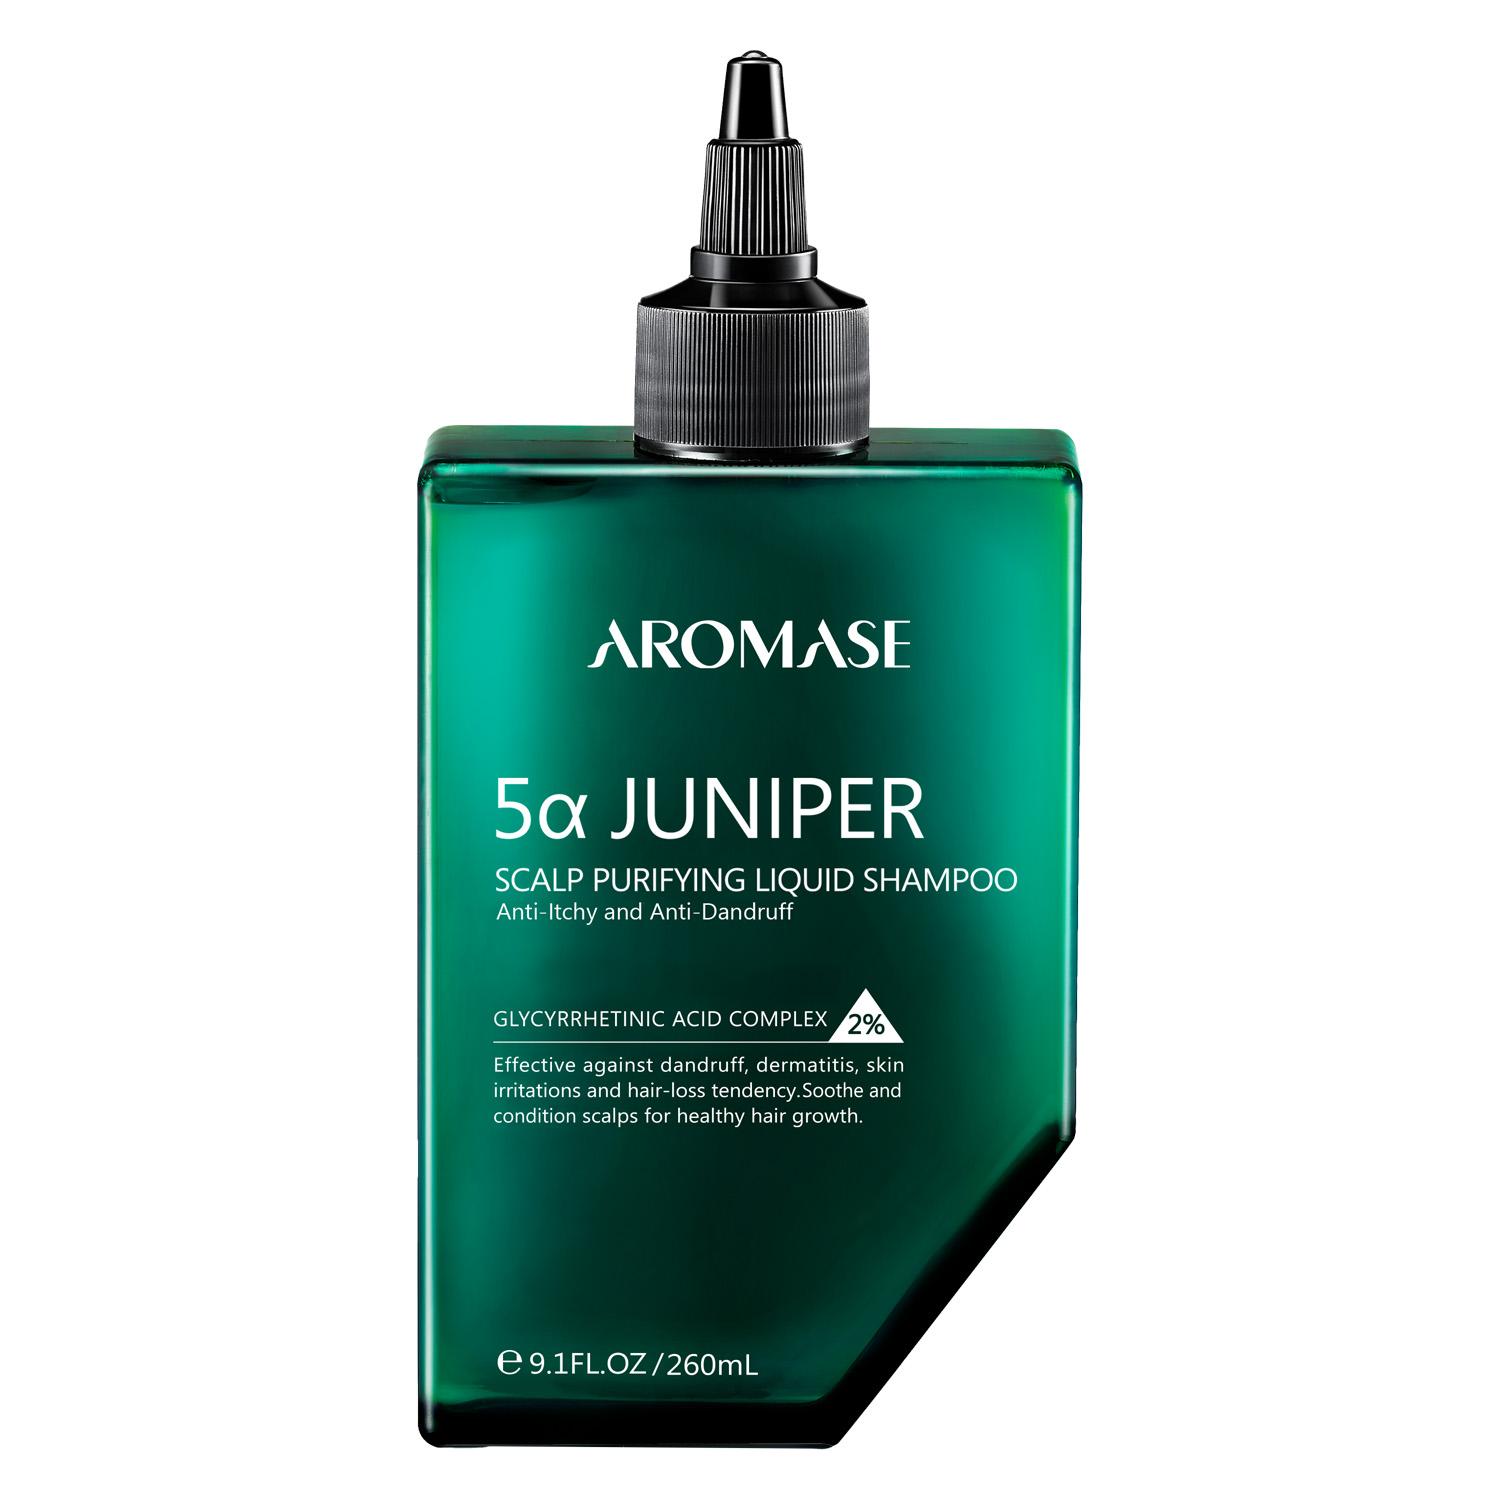 Aromase - 5α Juniper Scalp Purifying Liquid Shampoo